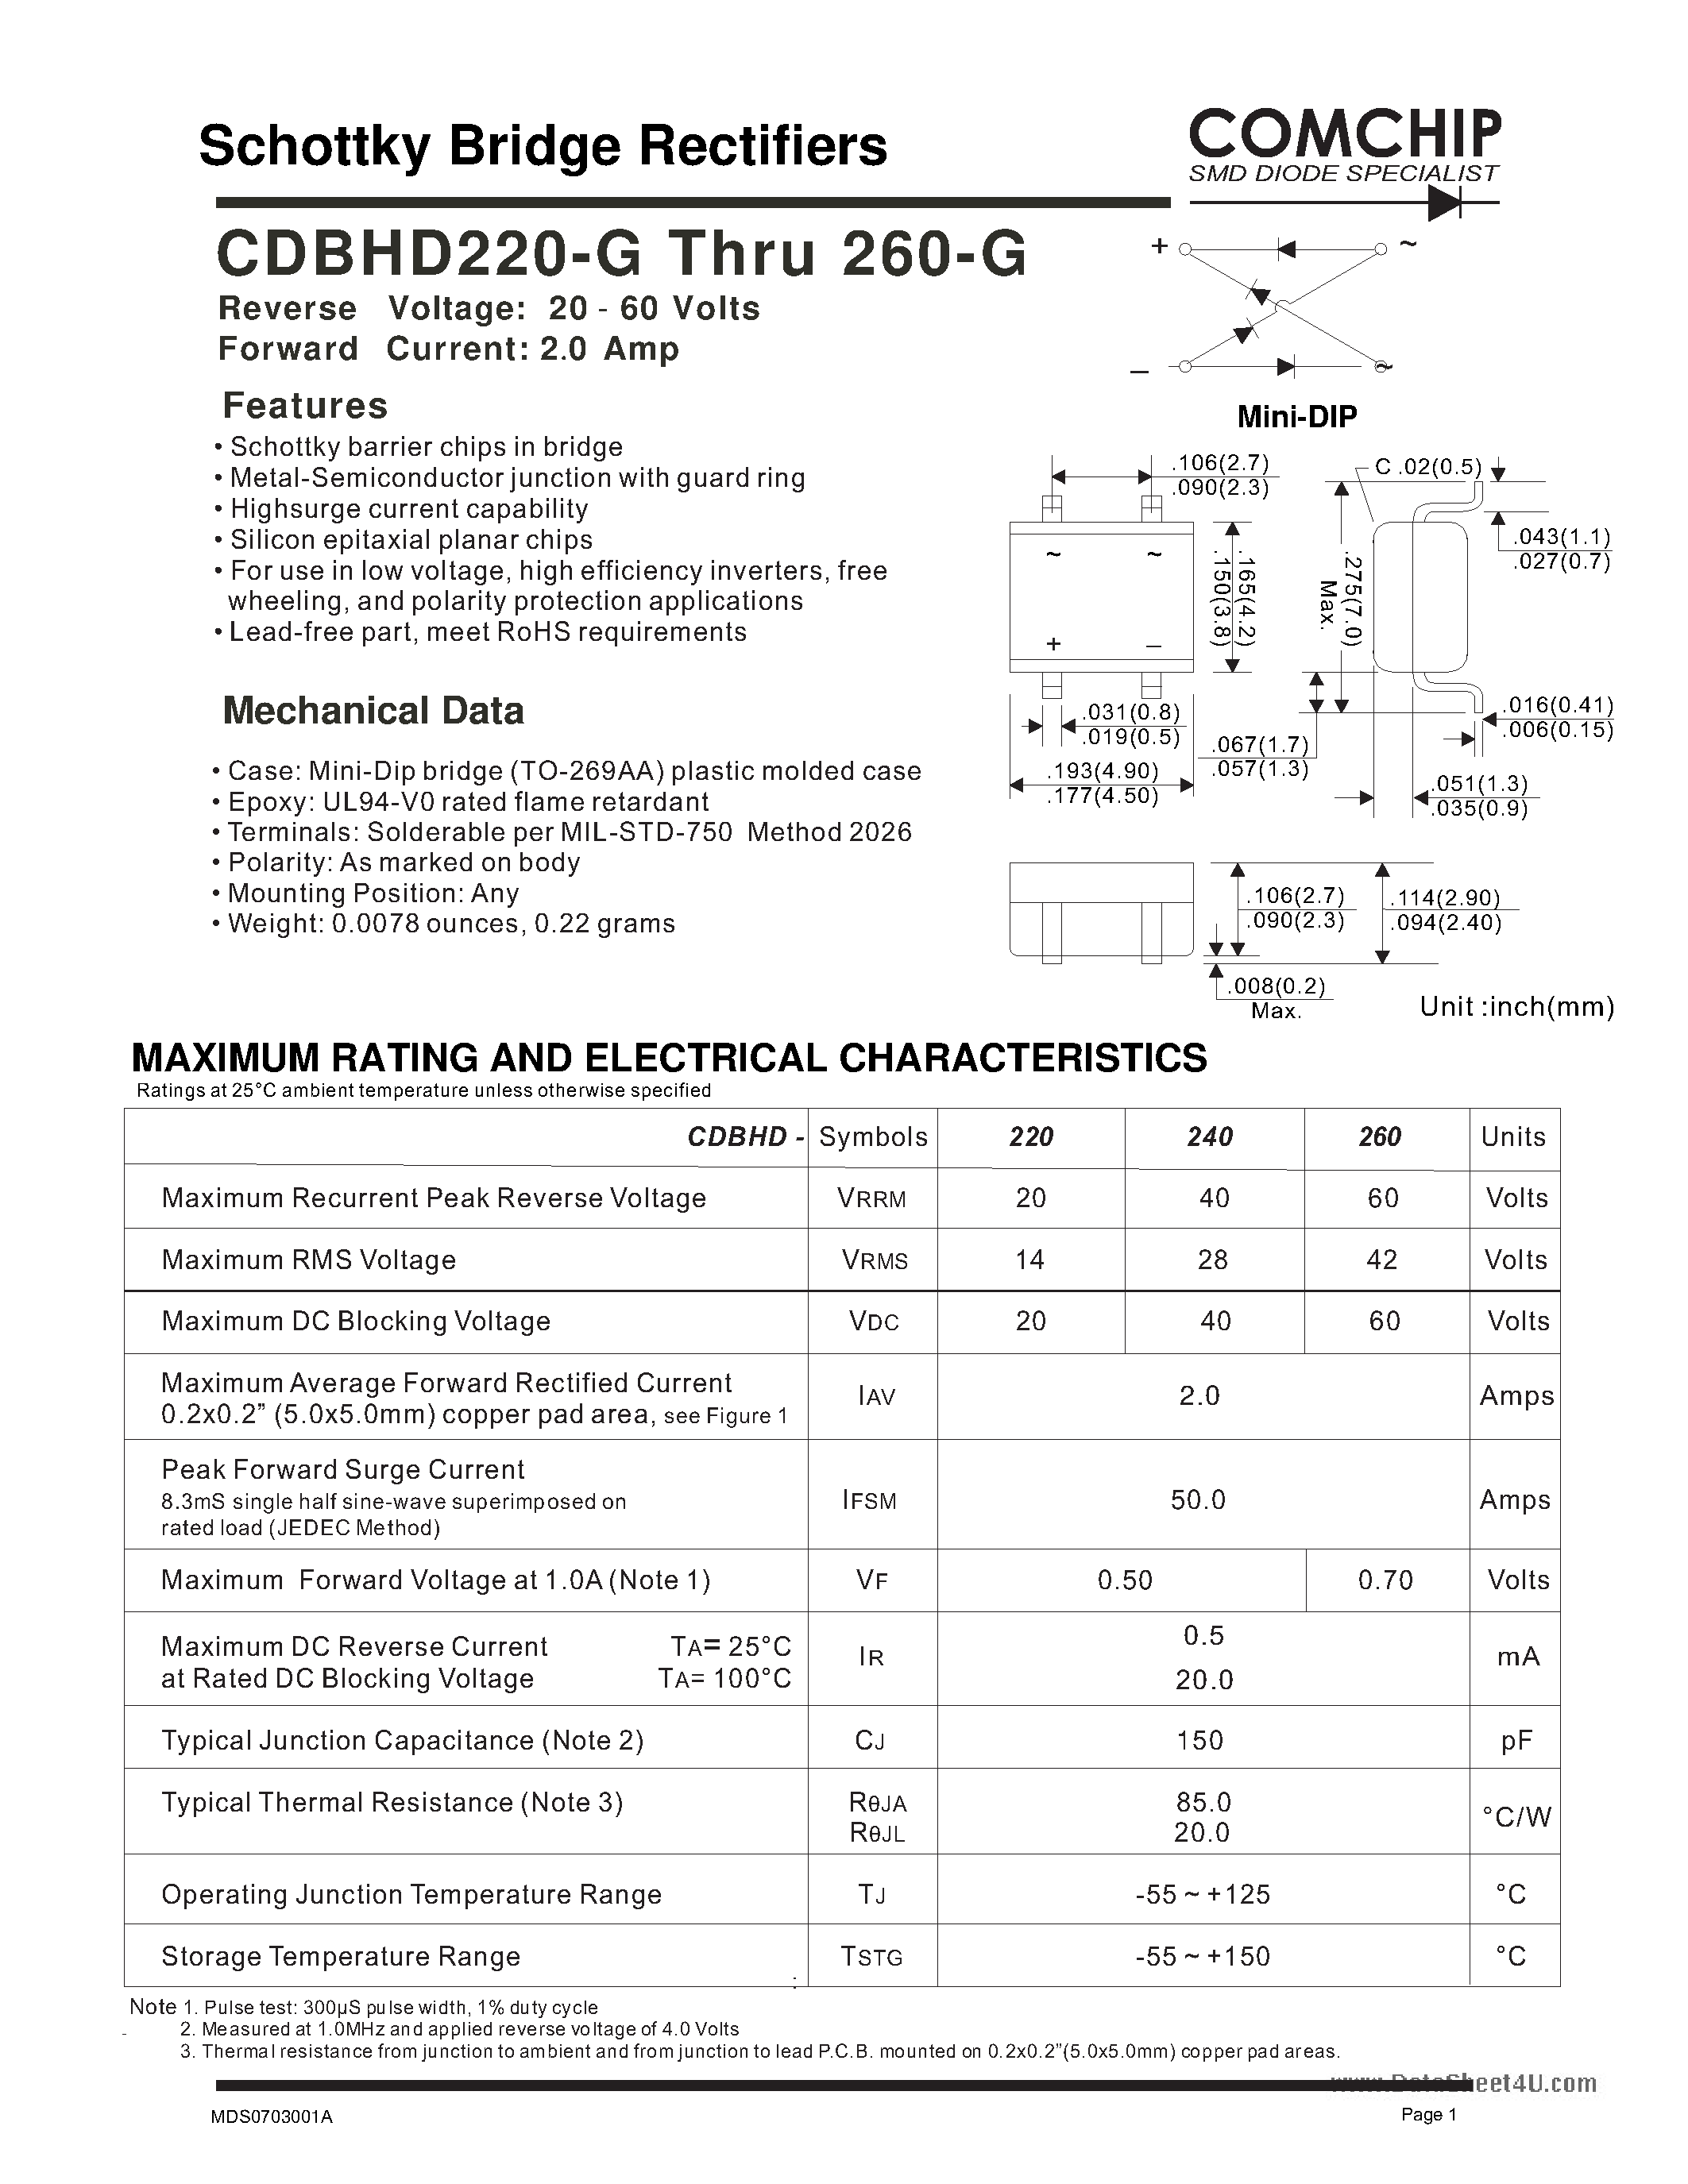 Даташит CDBHD220-G - (CDBHD220-G - CDBHD260-G) Schottky Bridge Rectifiers страница 1